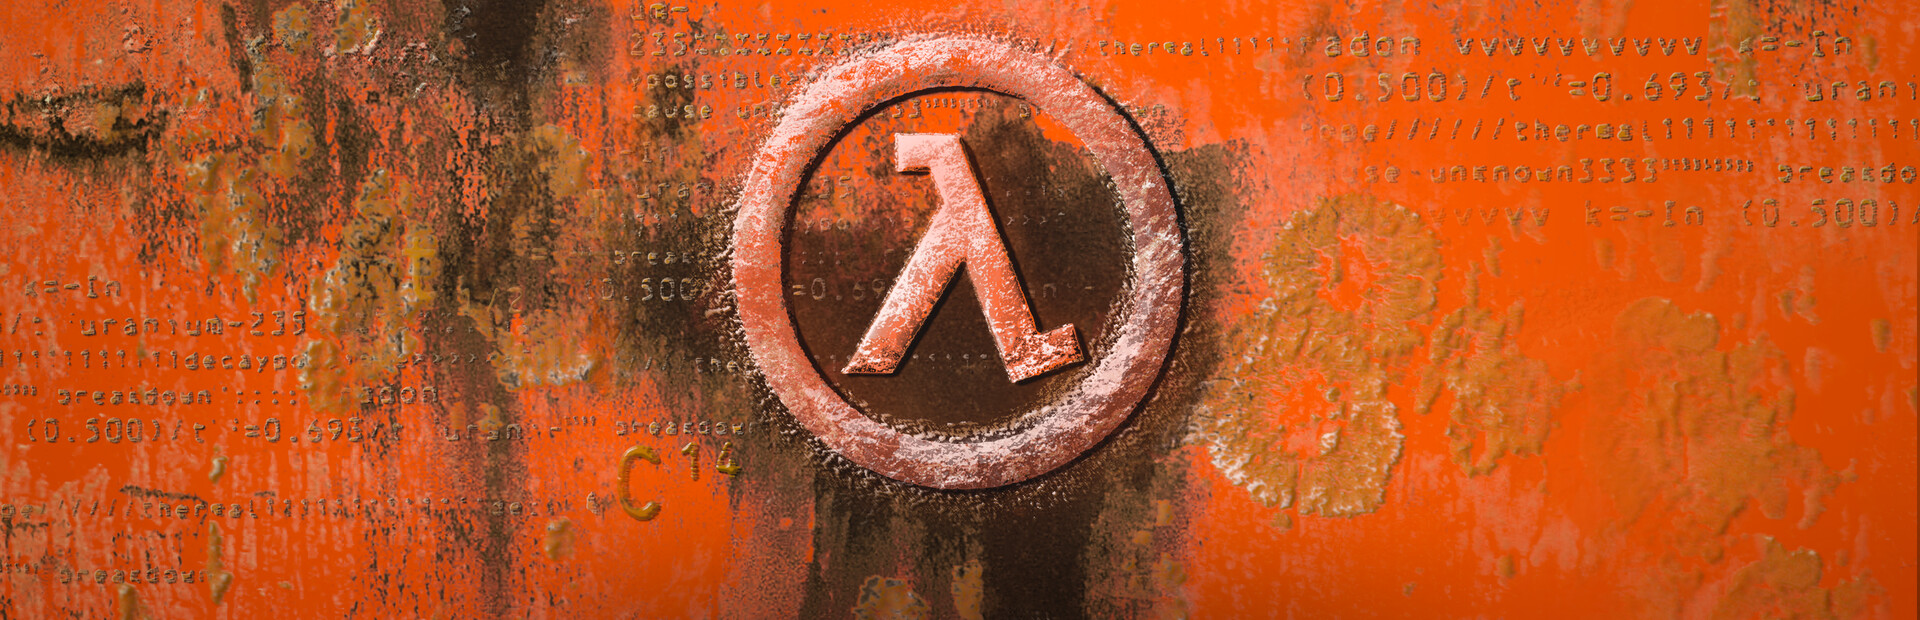 Half-Life cover image